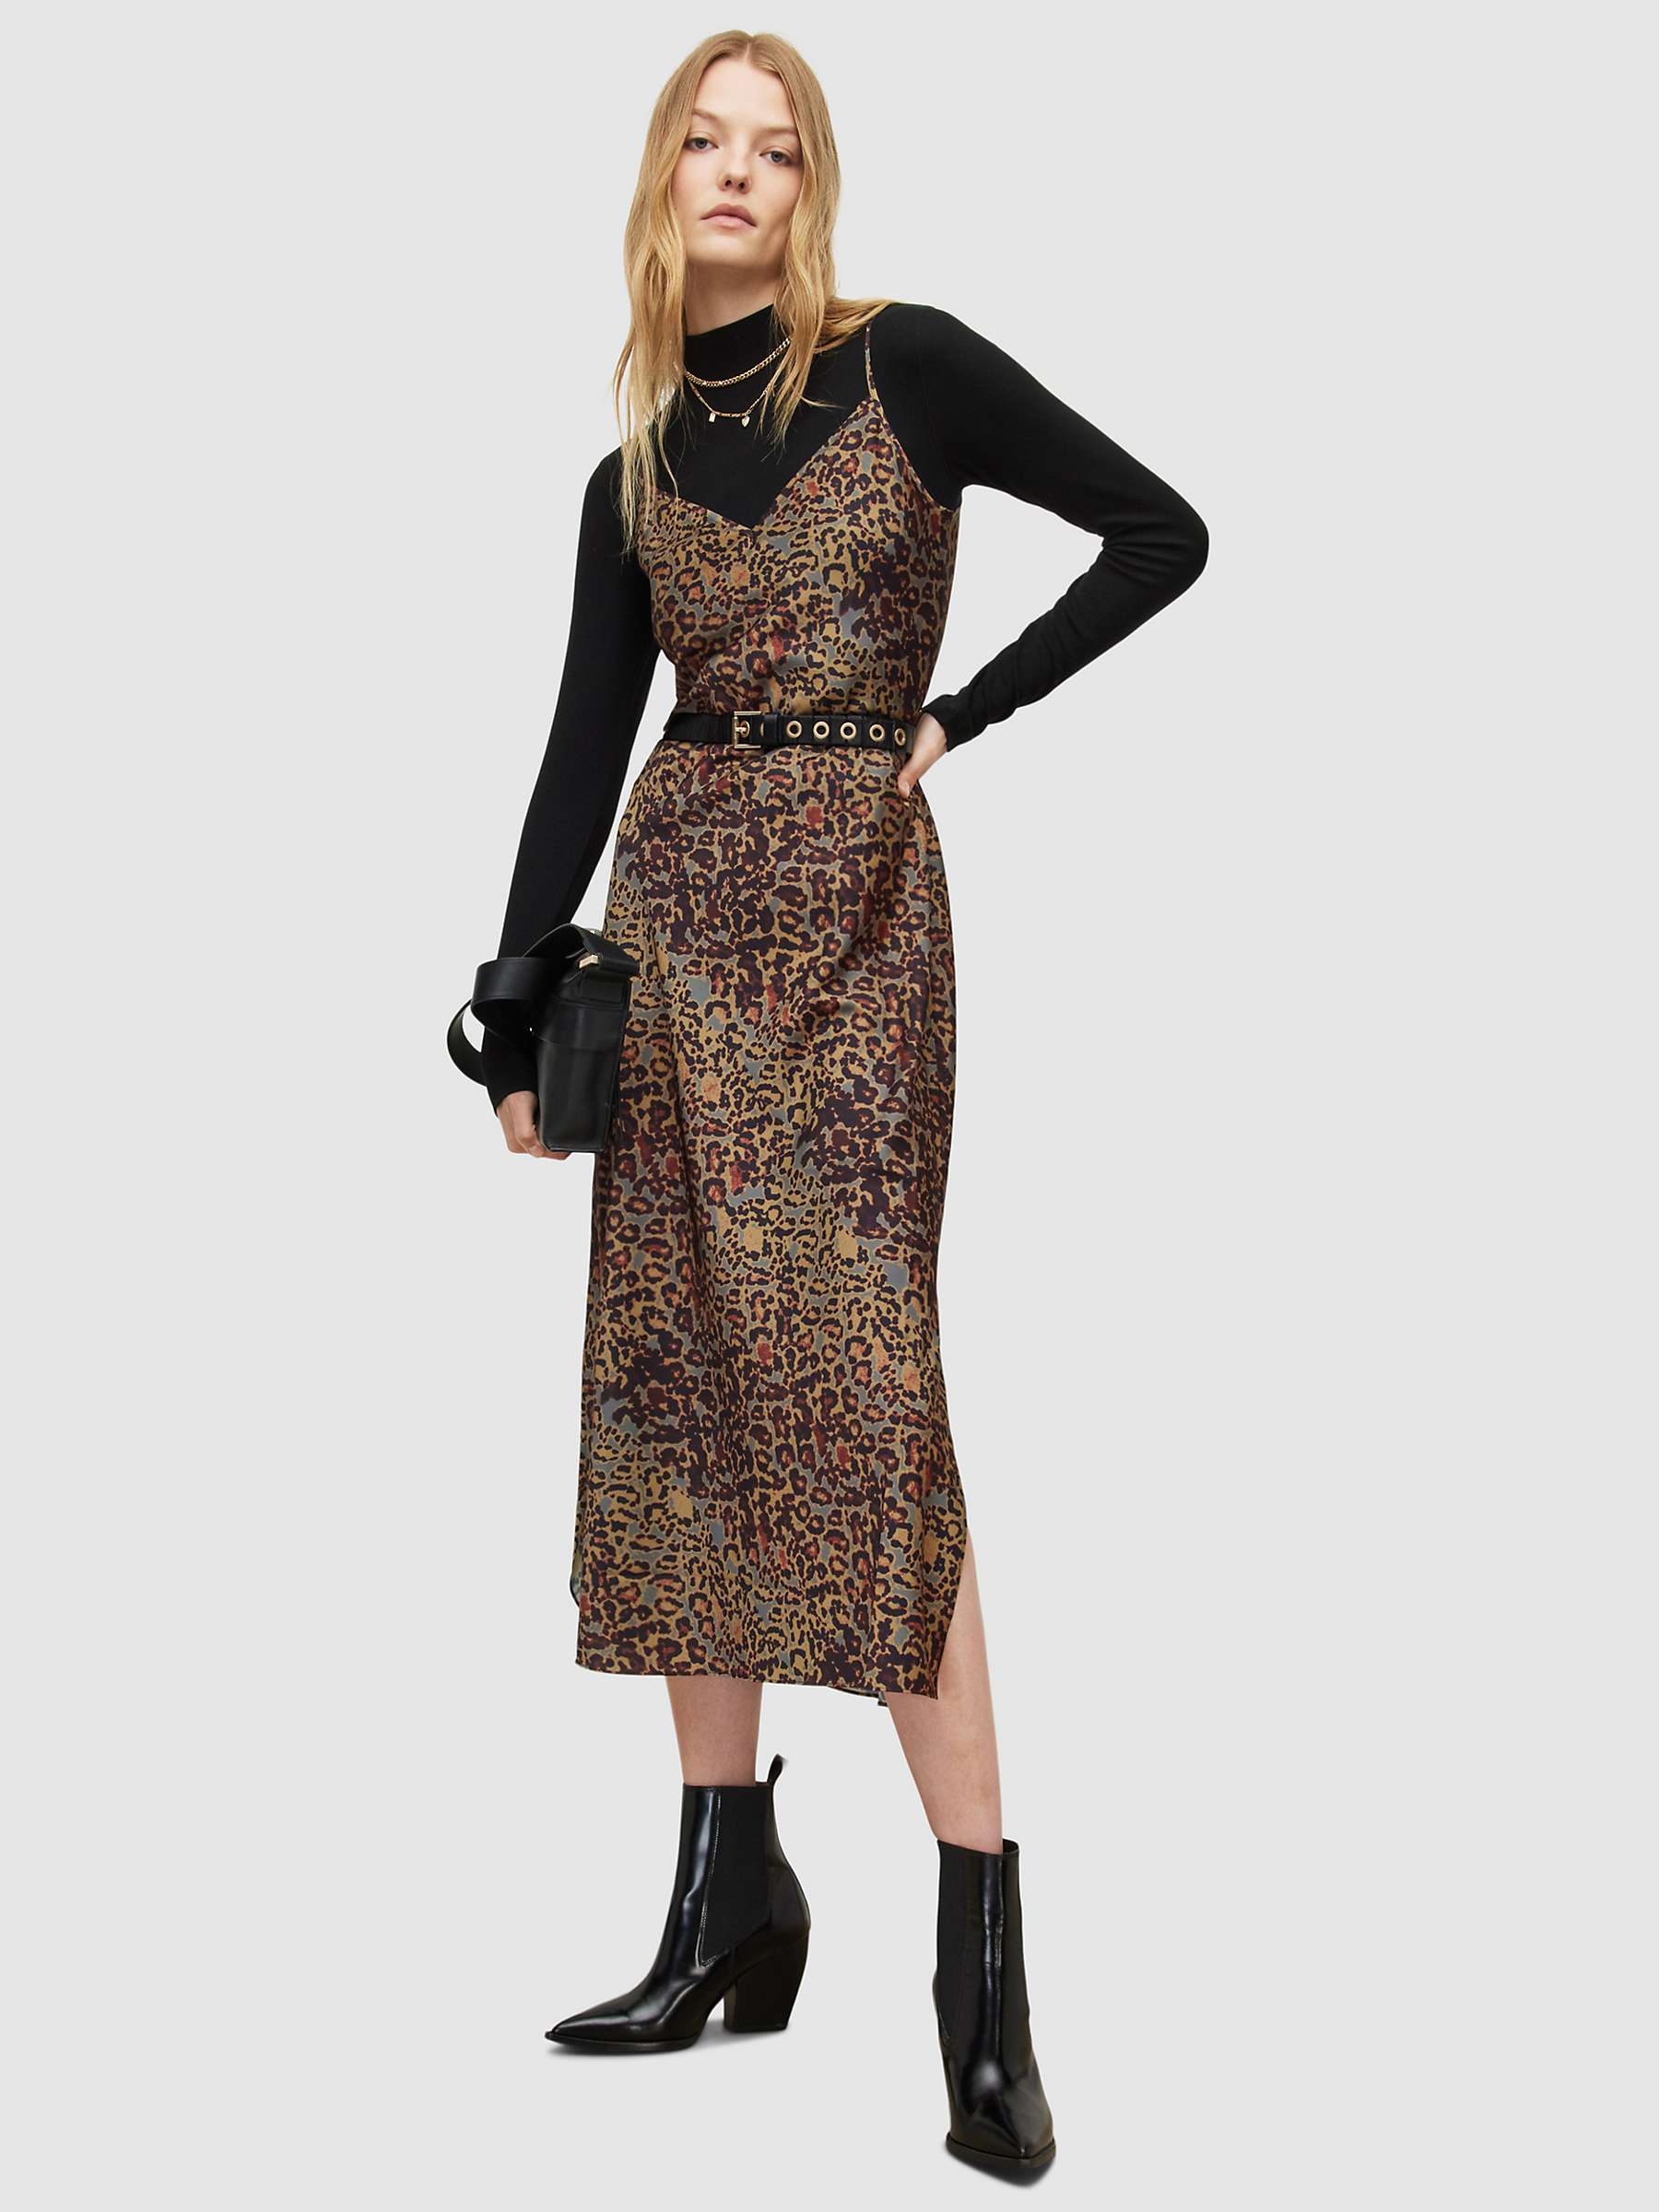 Buy AllSaints Tiana Leopard Print Slip Dress, Khaki Online at johnlewis.com